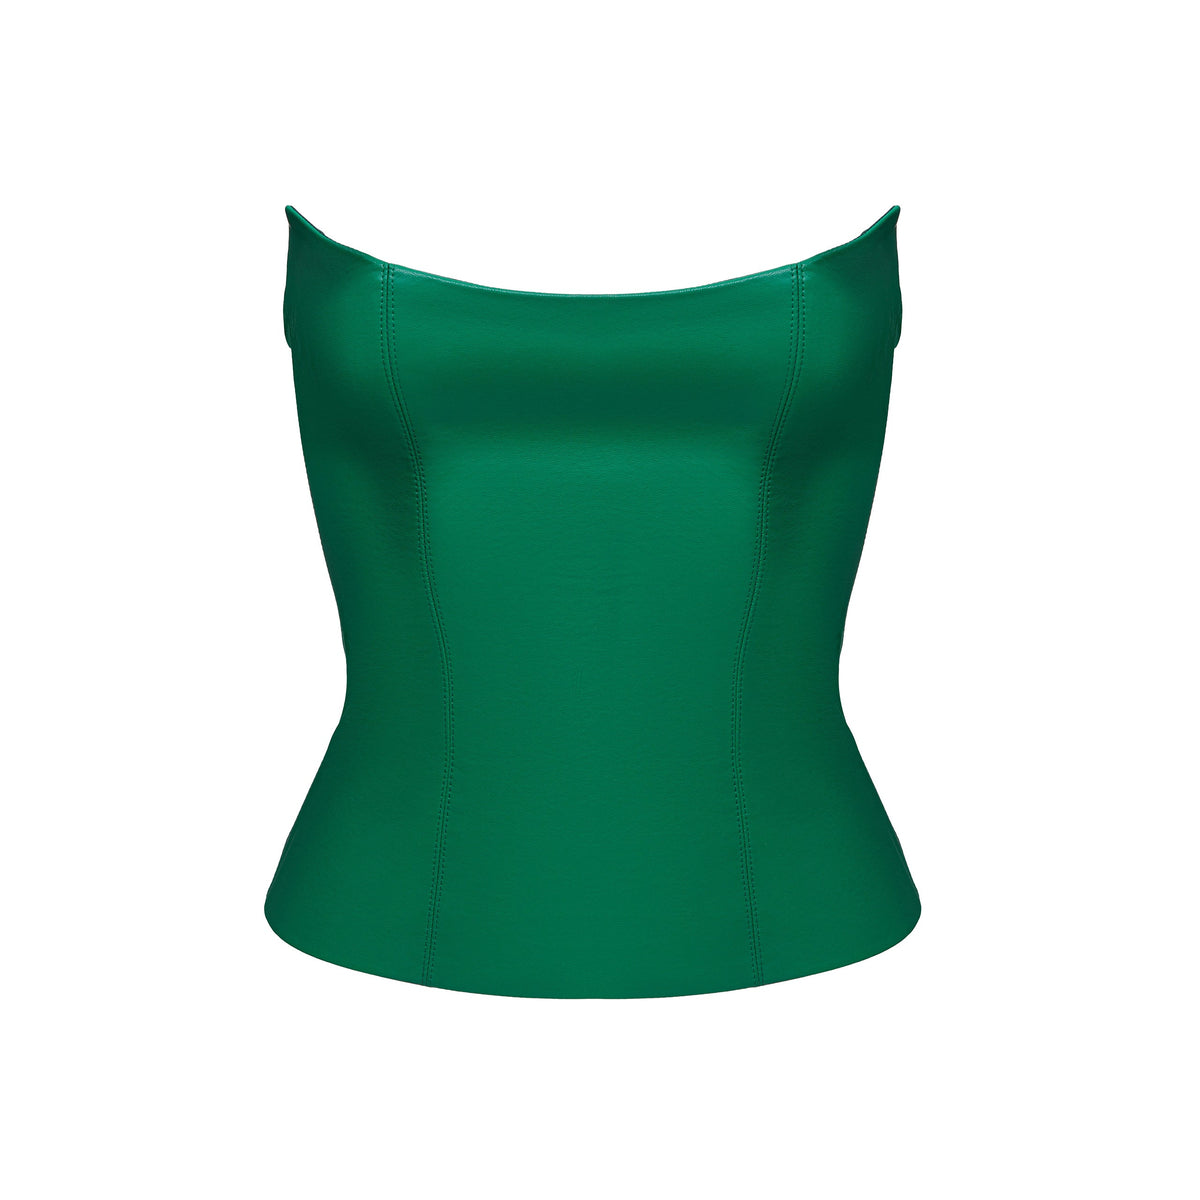 Fashionkilla utility corset top in green (part of a set)